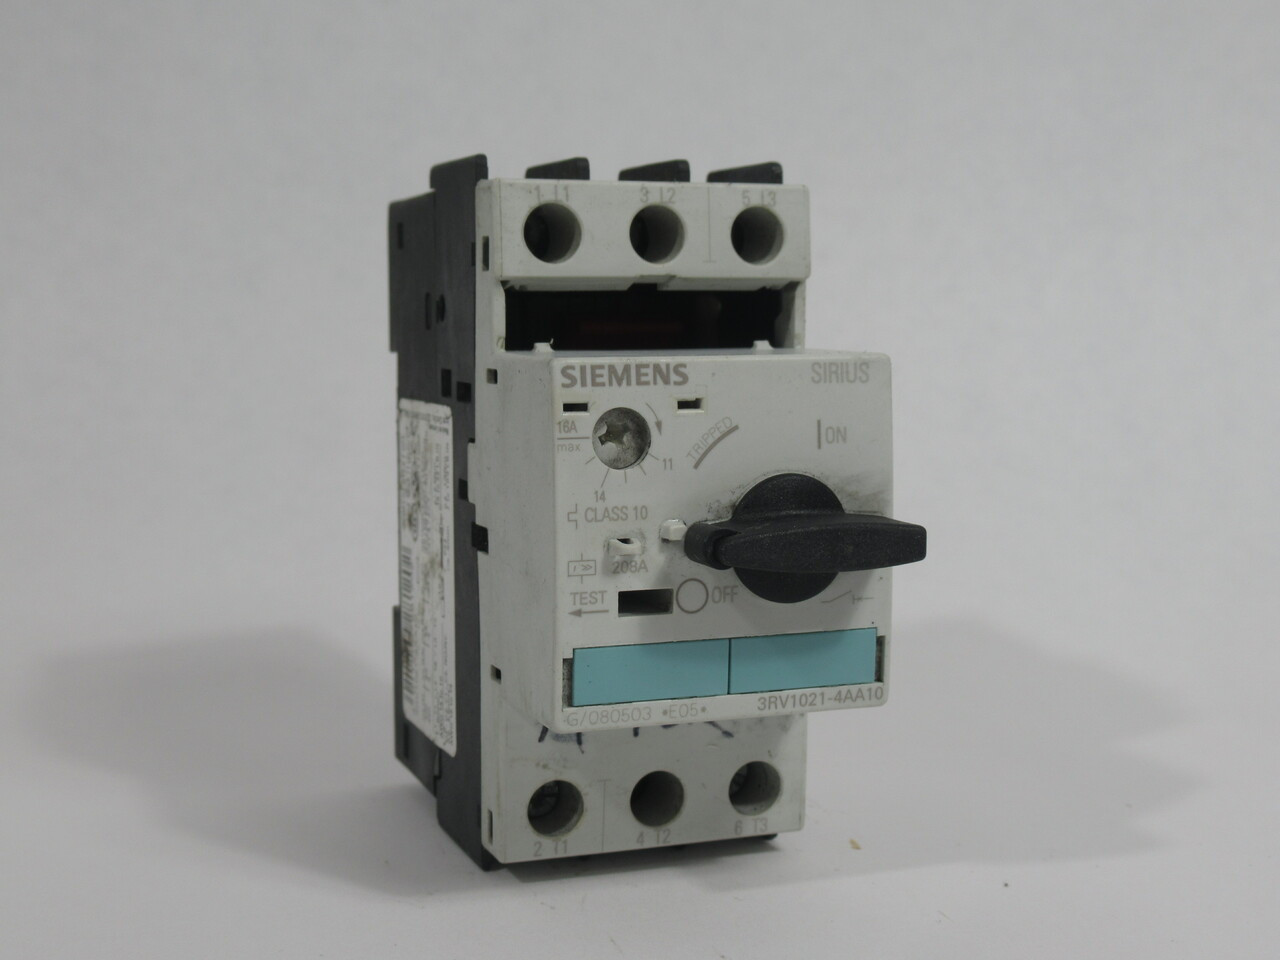 Siemens 3RV1021-4AA10 Circuit Breaker 11-16A 690VAC MISSING PLASTIC COVER USED